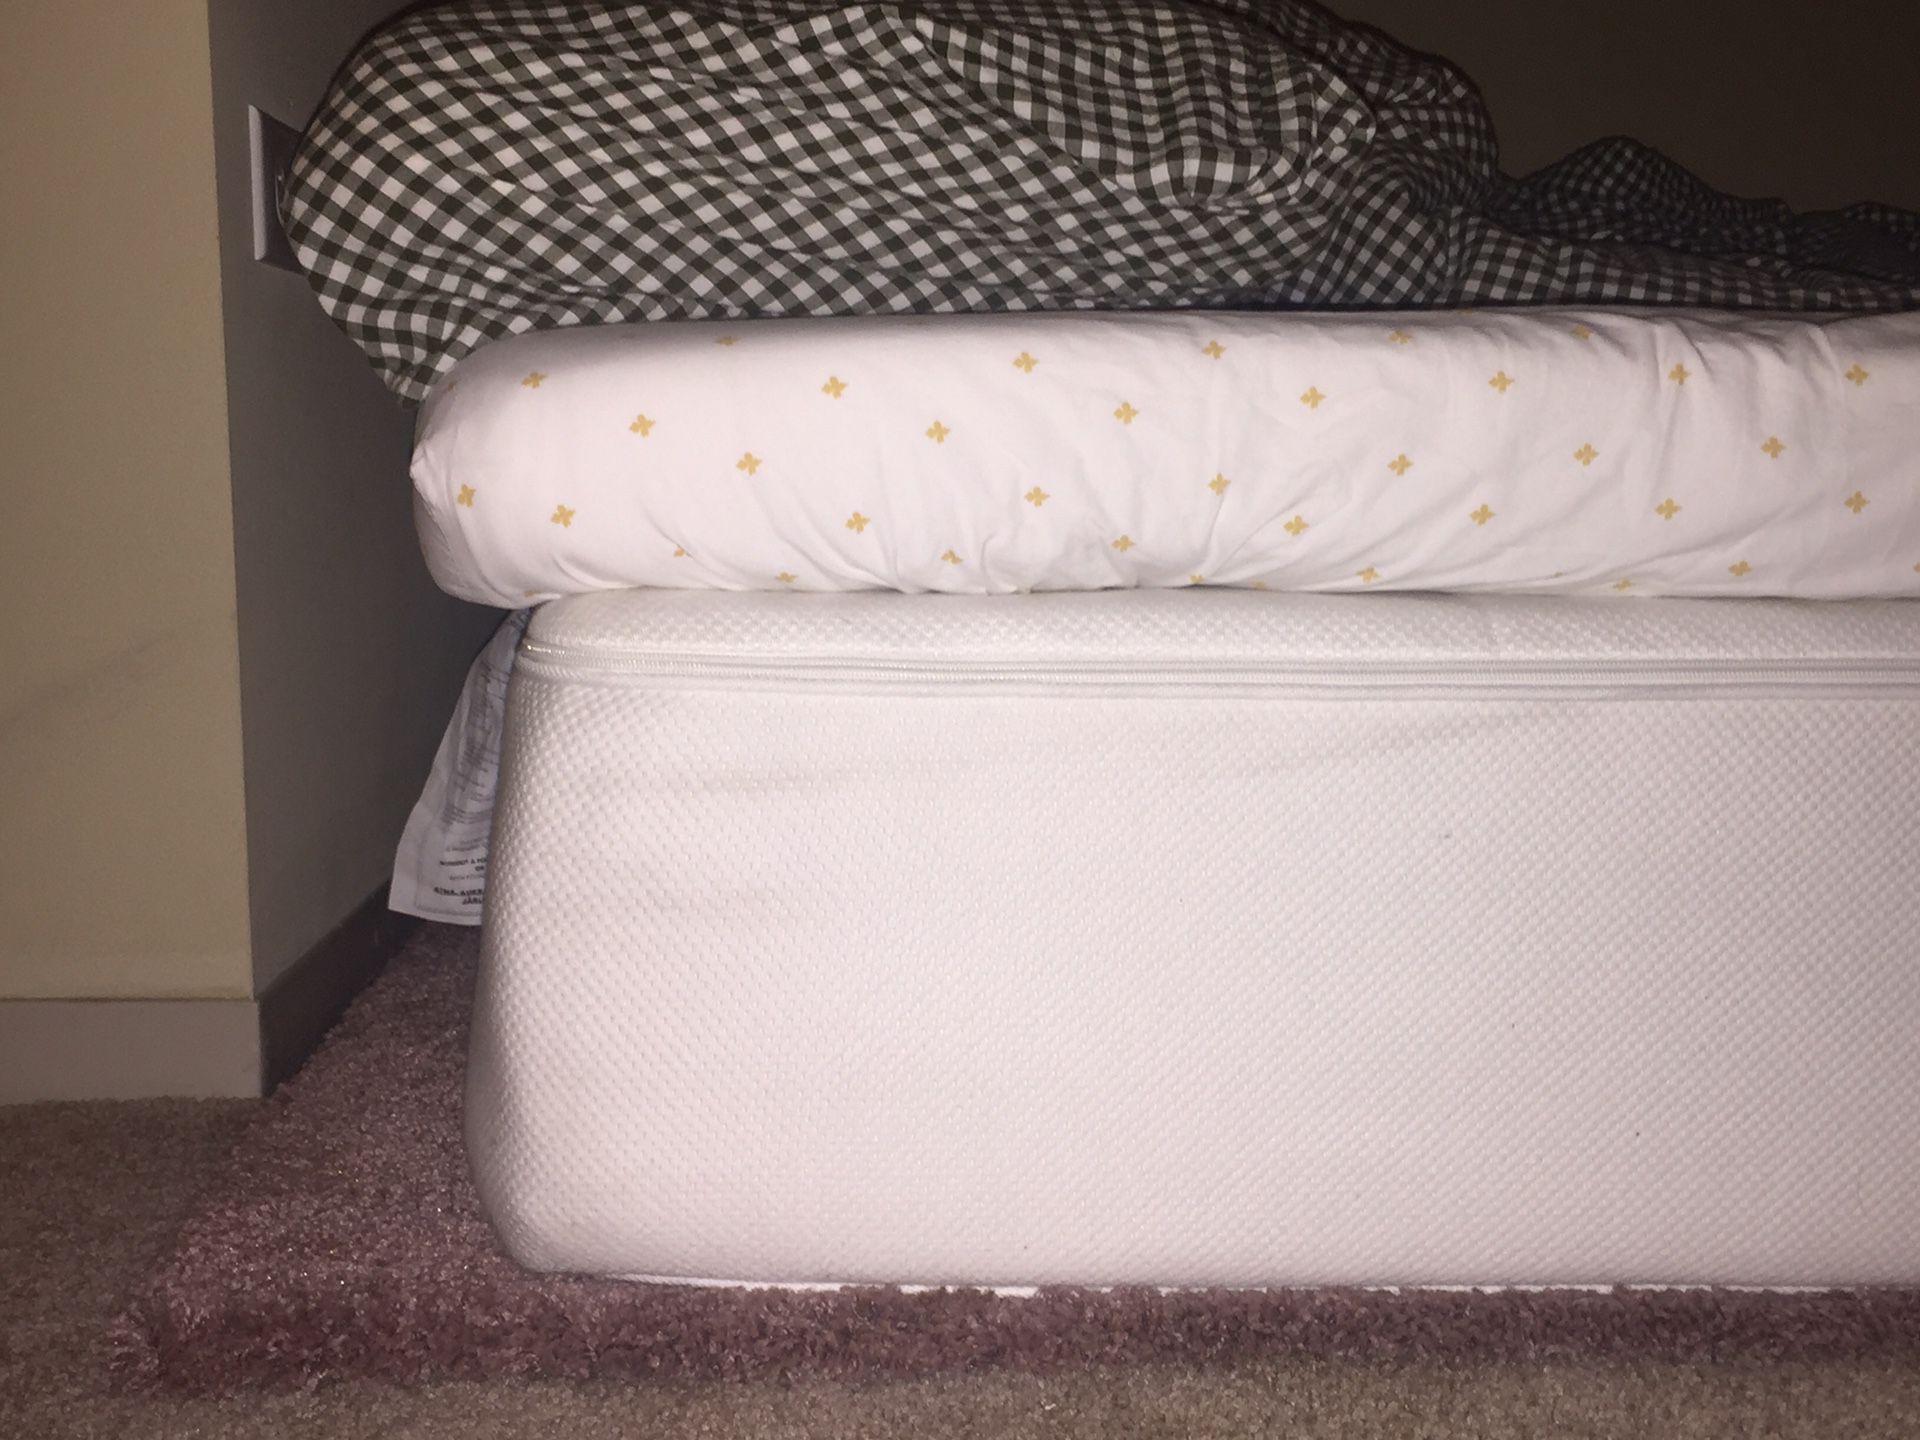 sultan flokenes mattress cover laundry